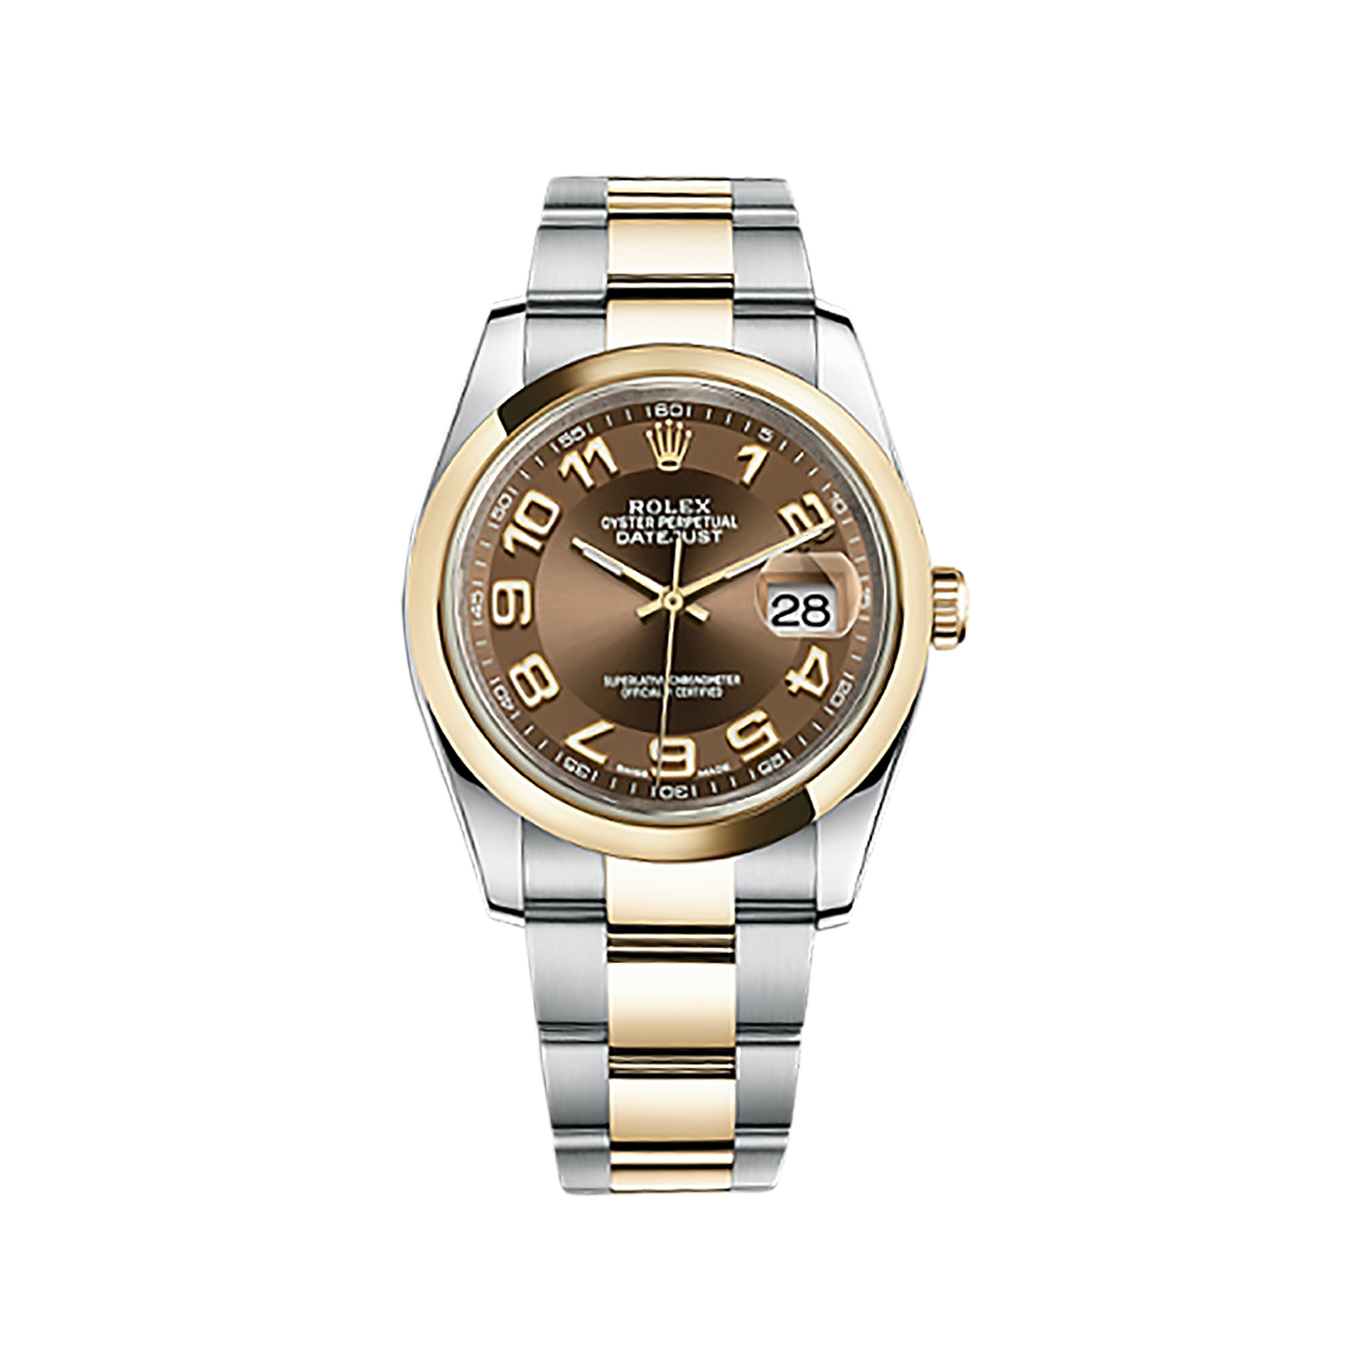 Datejust 36 116203 Gold & Stainless Steel Watch (Bronze)